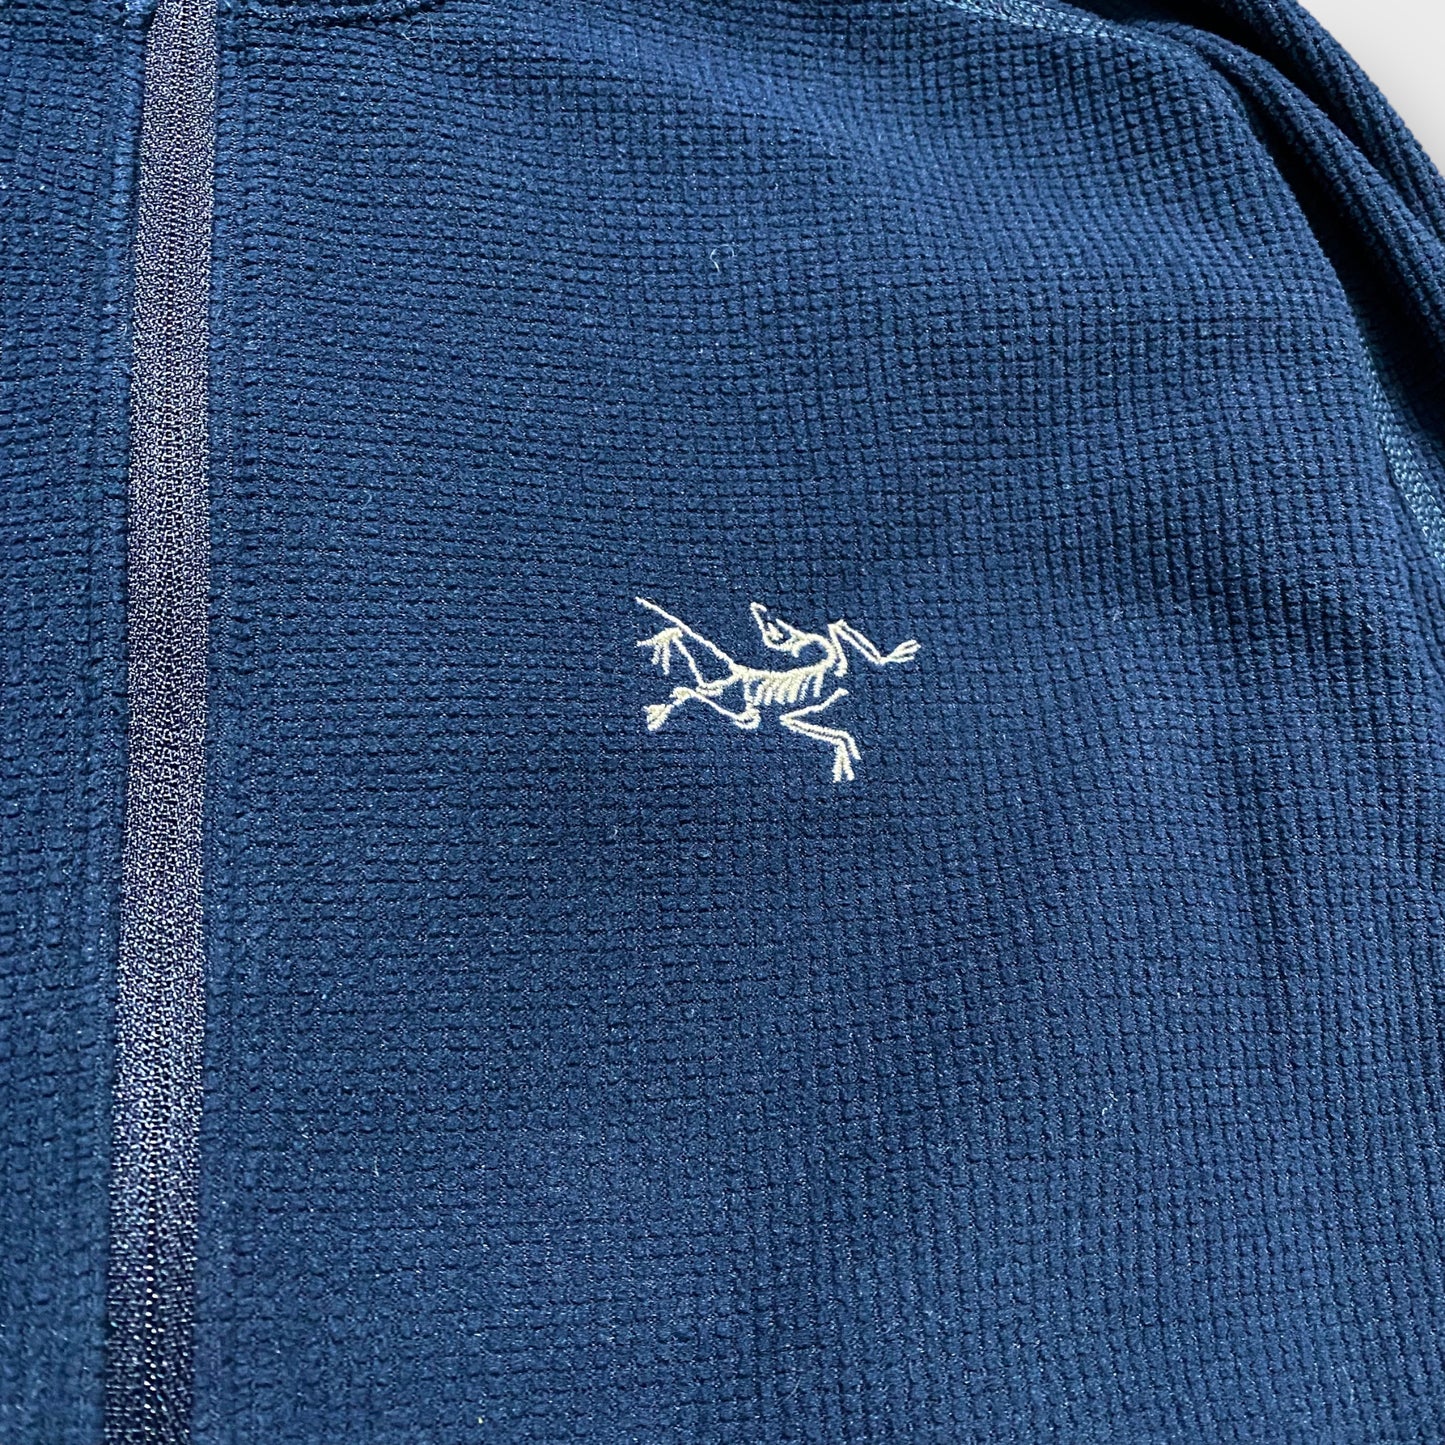 00's "Arc'teryx" Half zip polartec thermal knit sweater